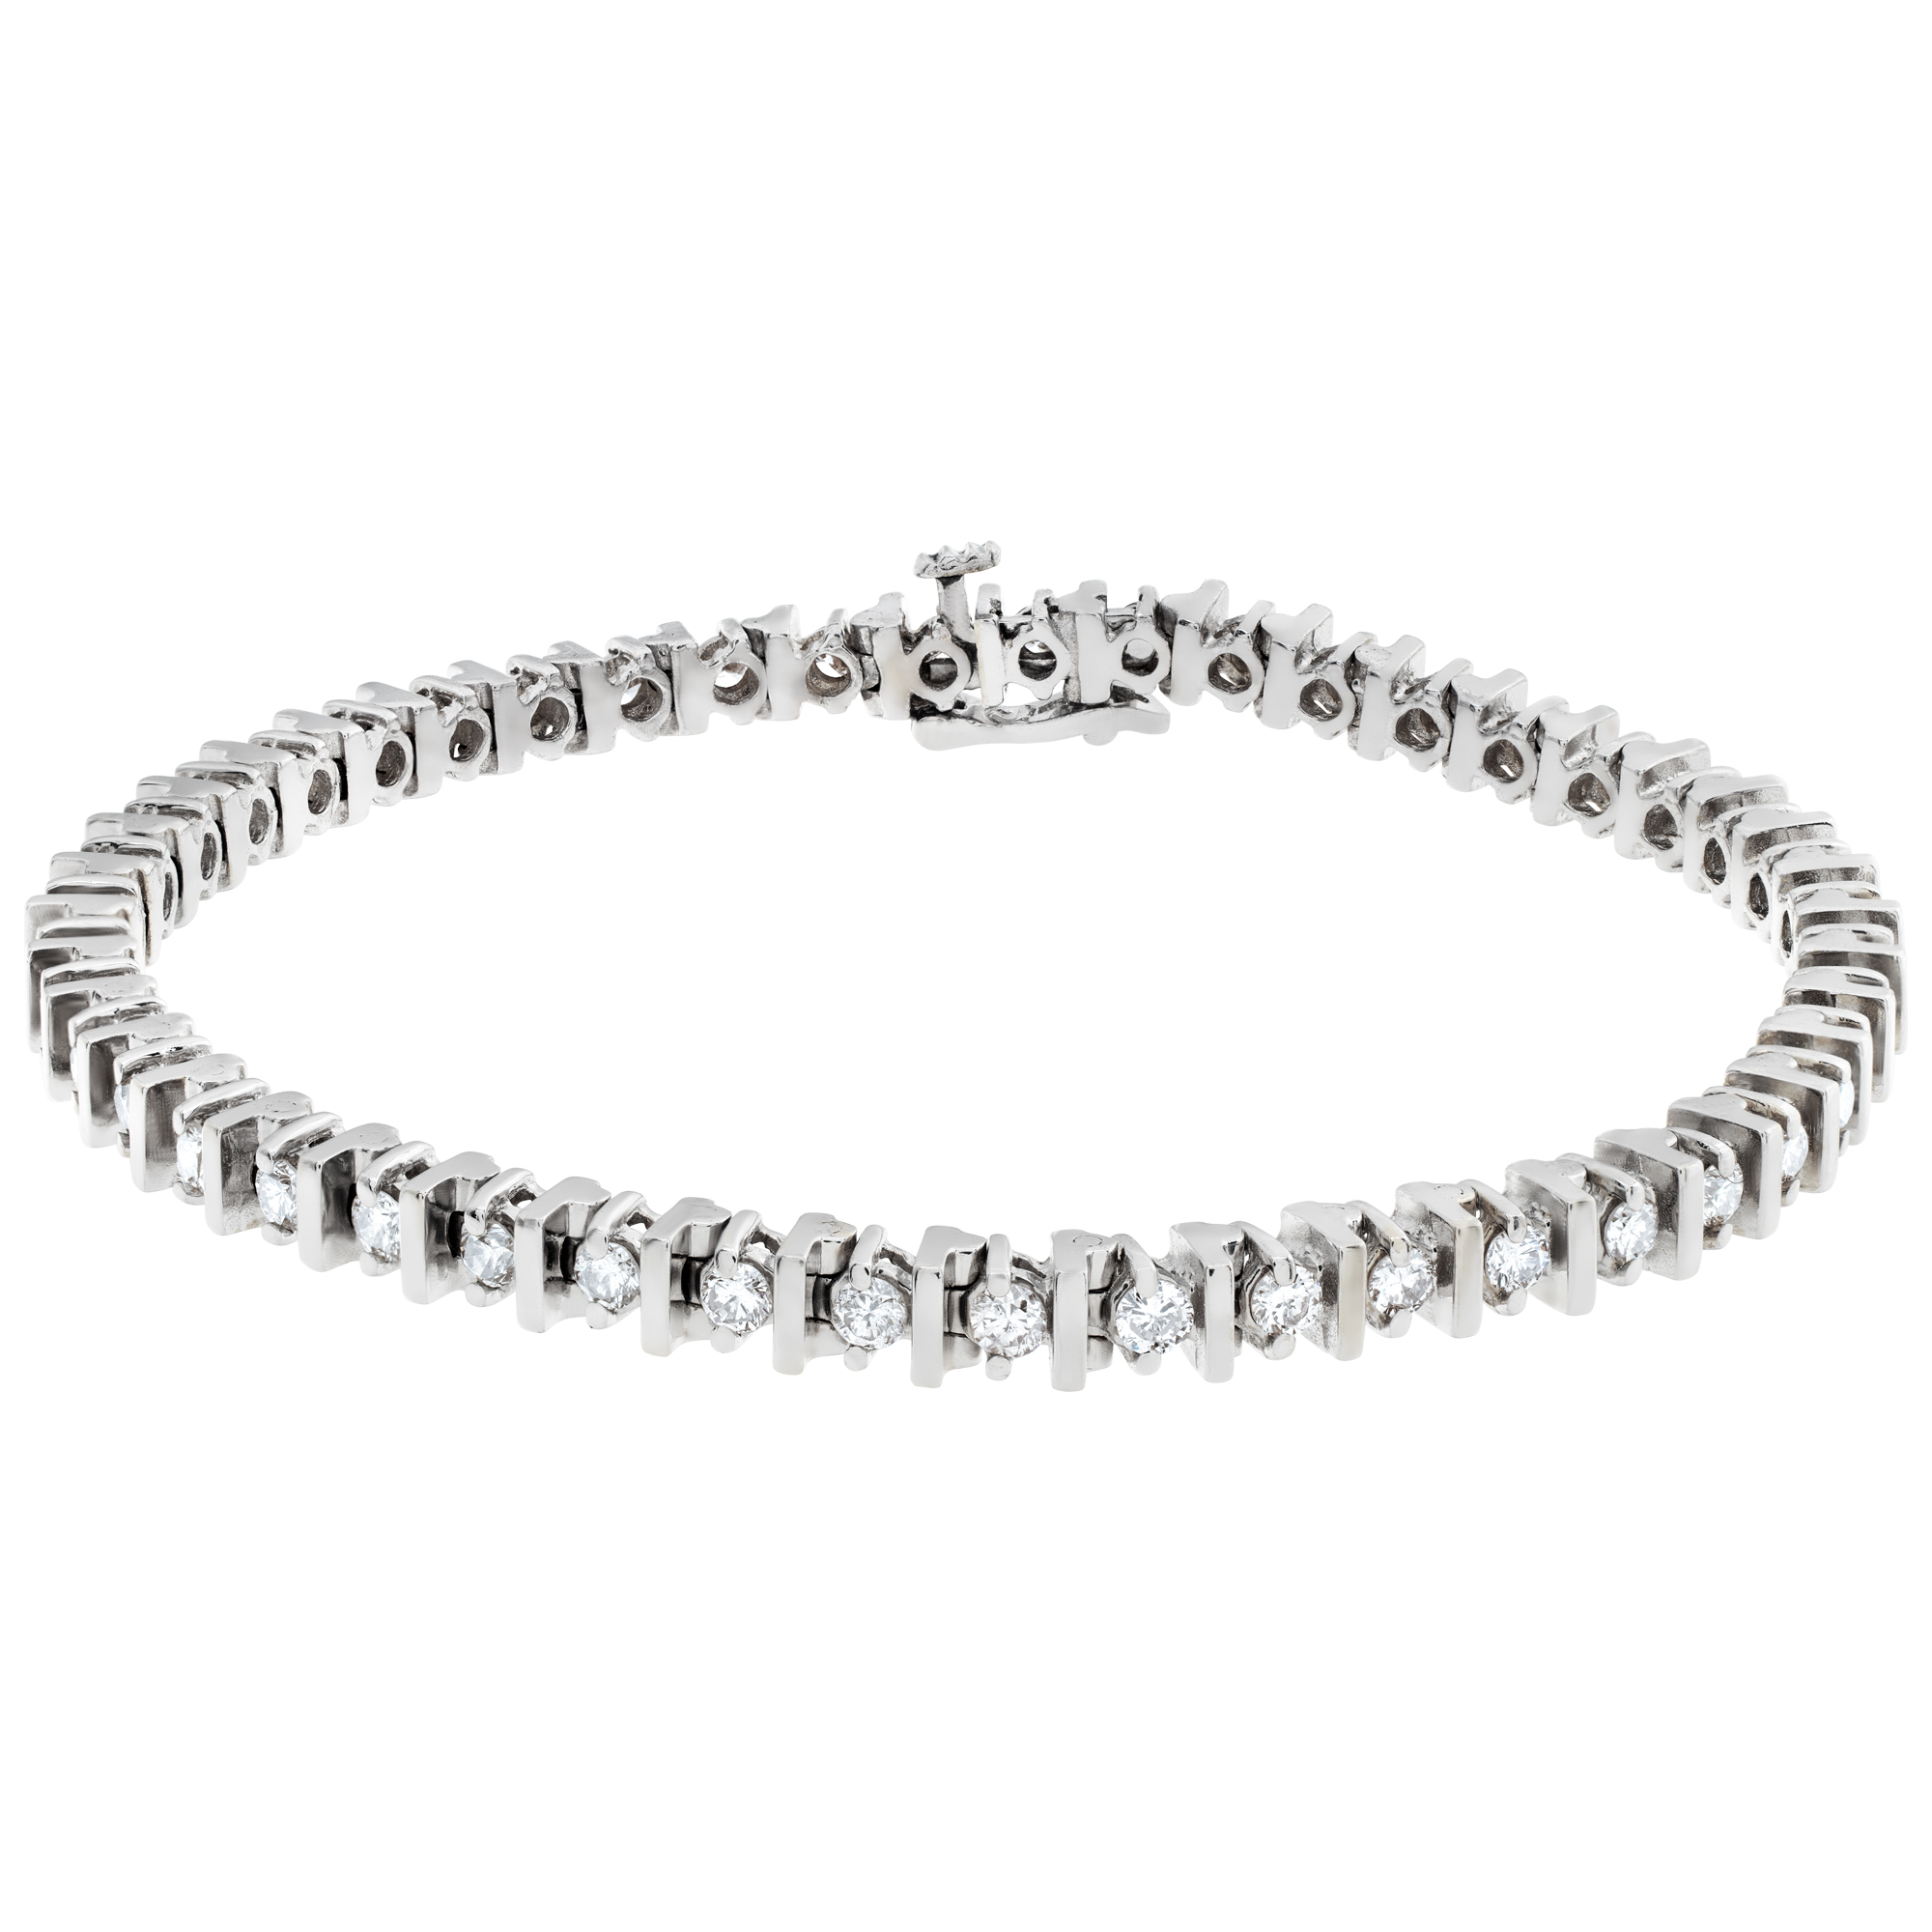 Diamond line bracelet in 14k white gold with 1.50 carat round brilliant cut diamonds